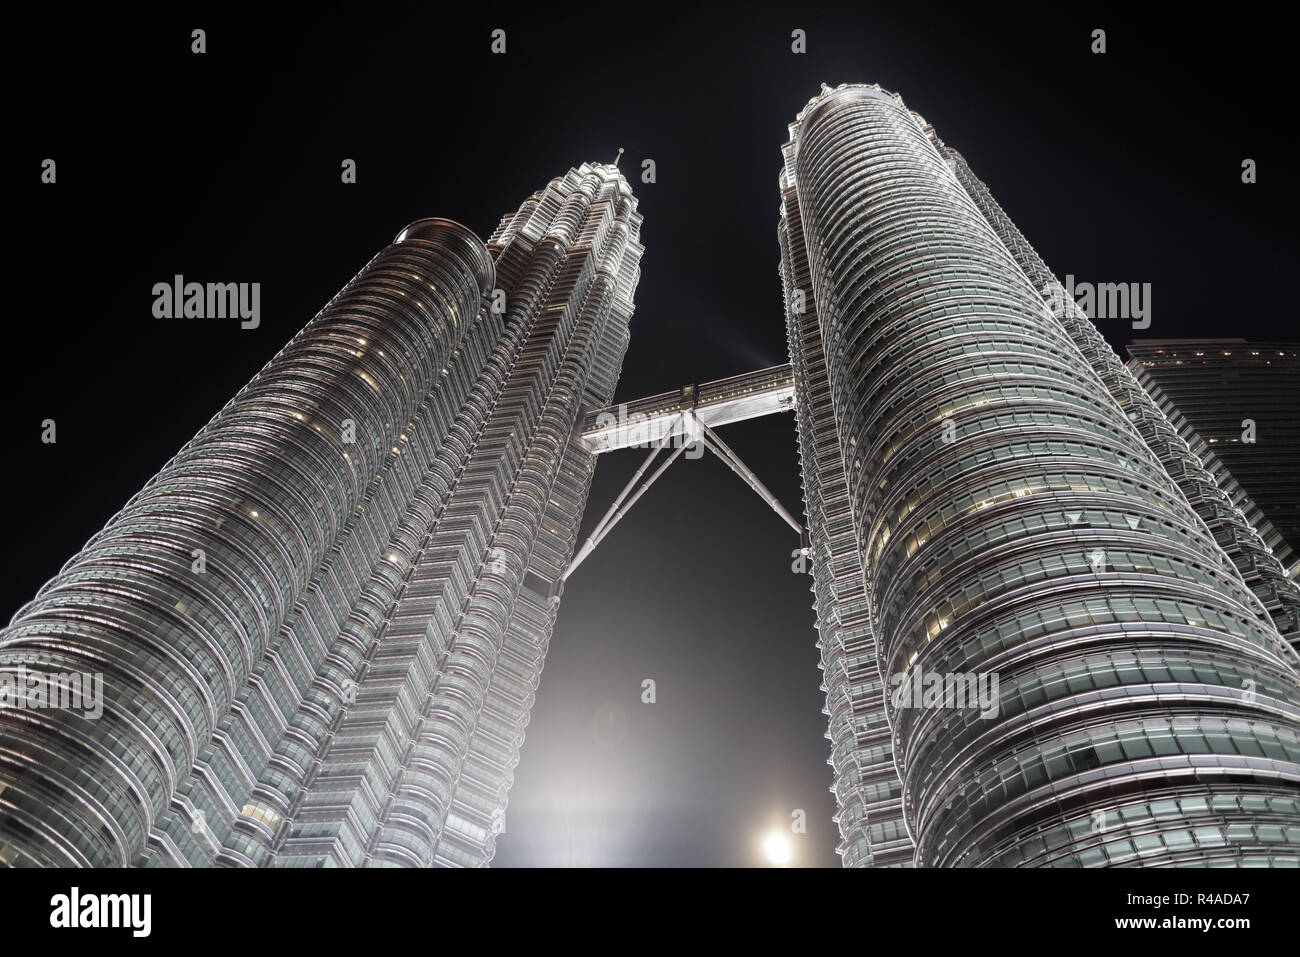 The Famous Petronas Towers At Night In Kuala Lumpur, Malaysia Stock Photo